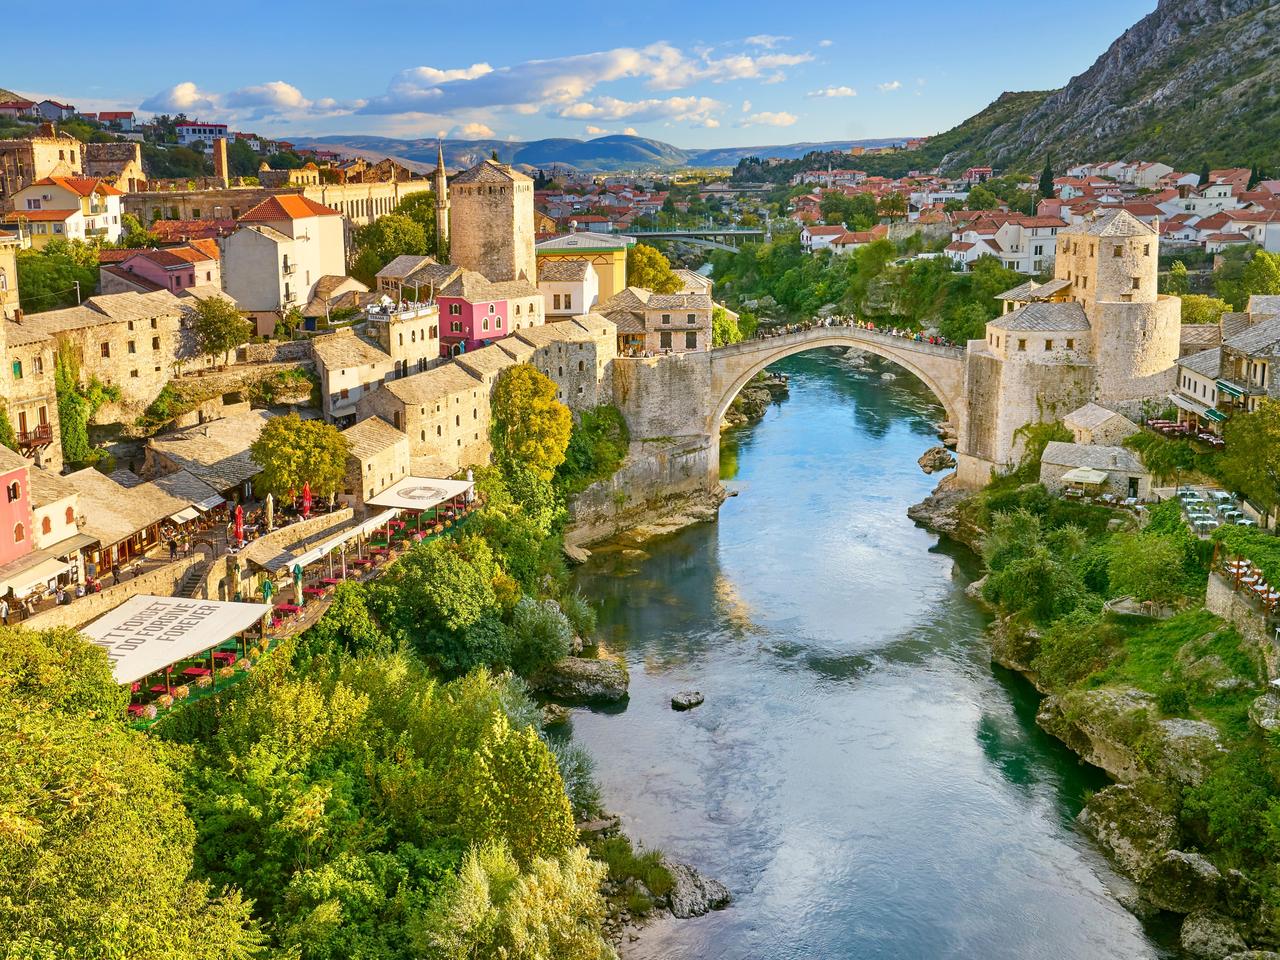 Stari Most or Old Bridge, Neretva River, Mostar, Bosnia and Herzegovina